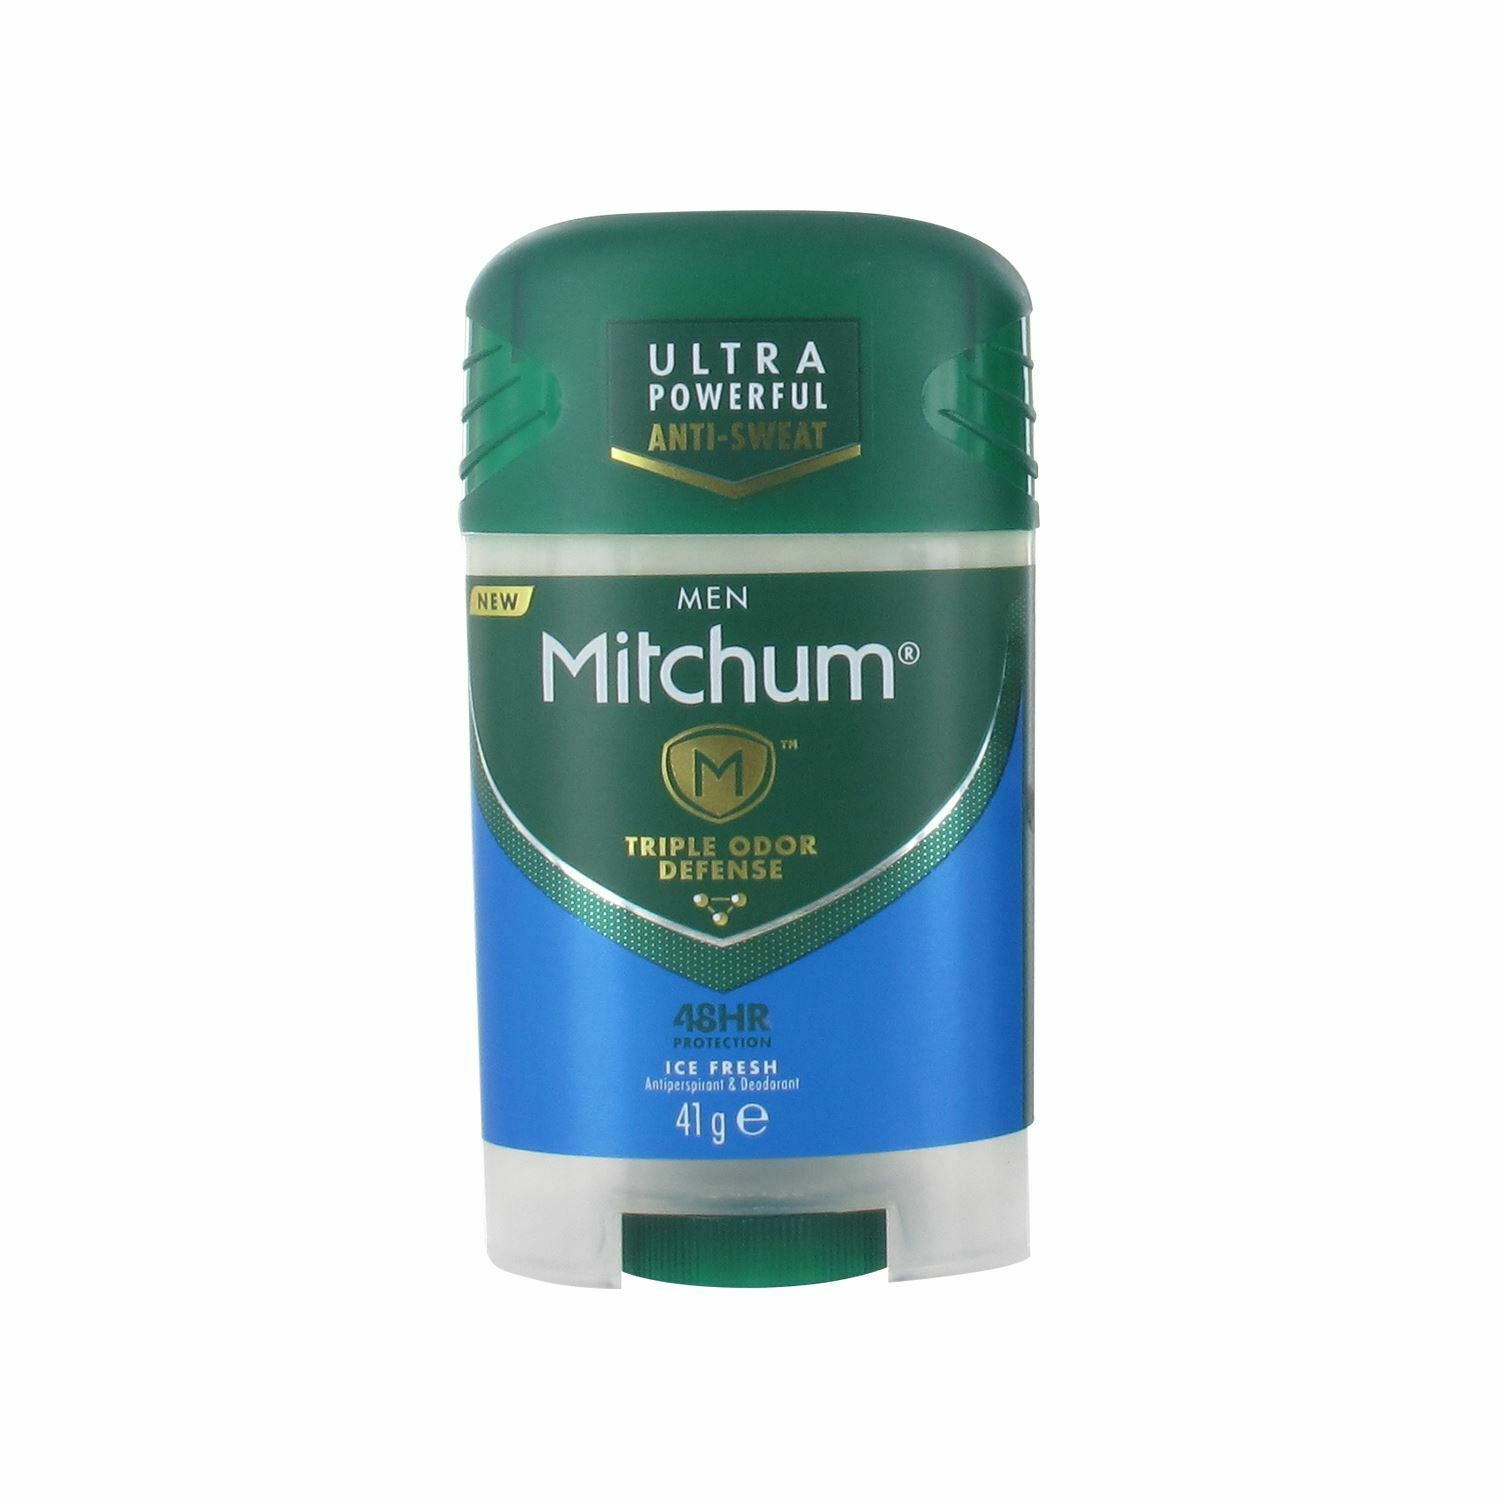 Mitchum Ice Fresh Deodorant Stick 41g